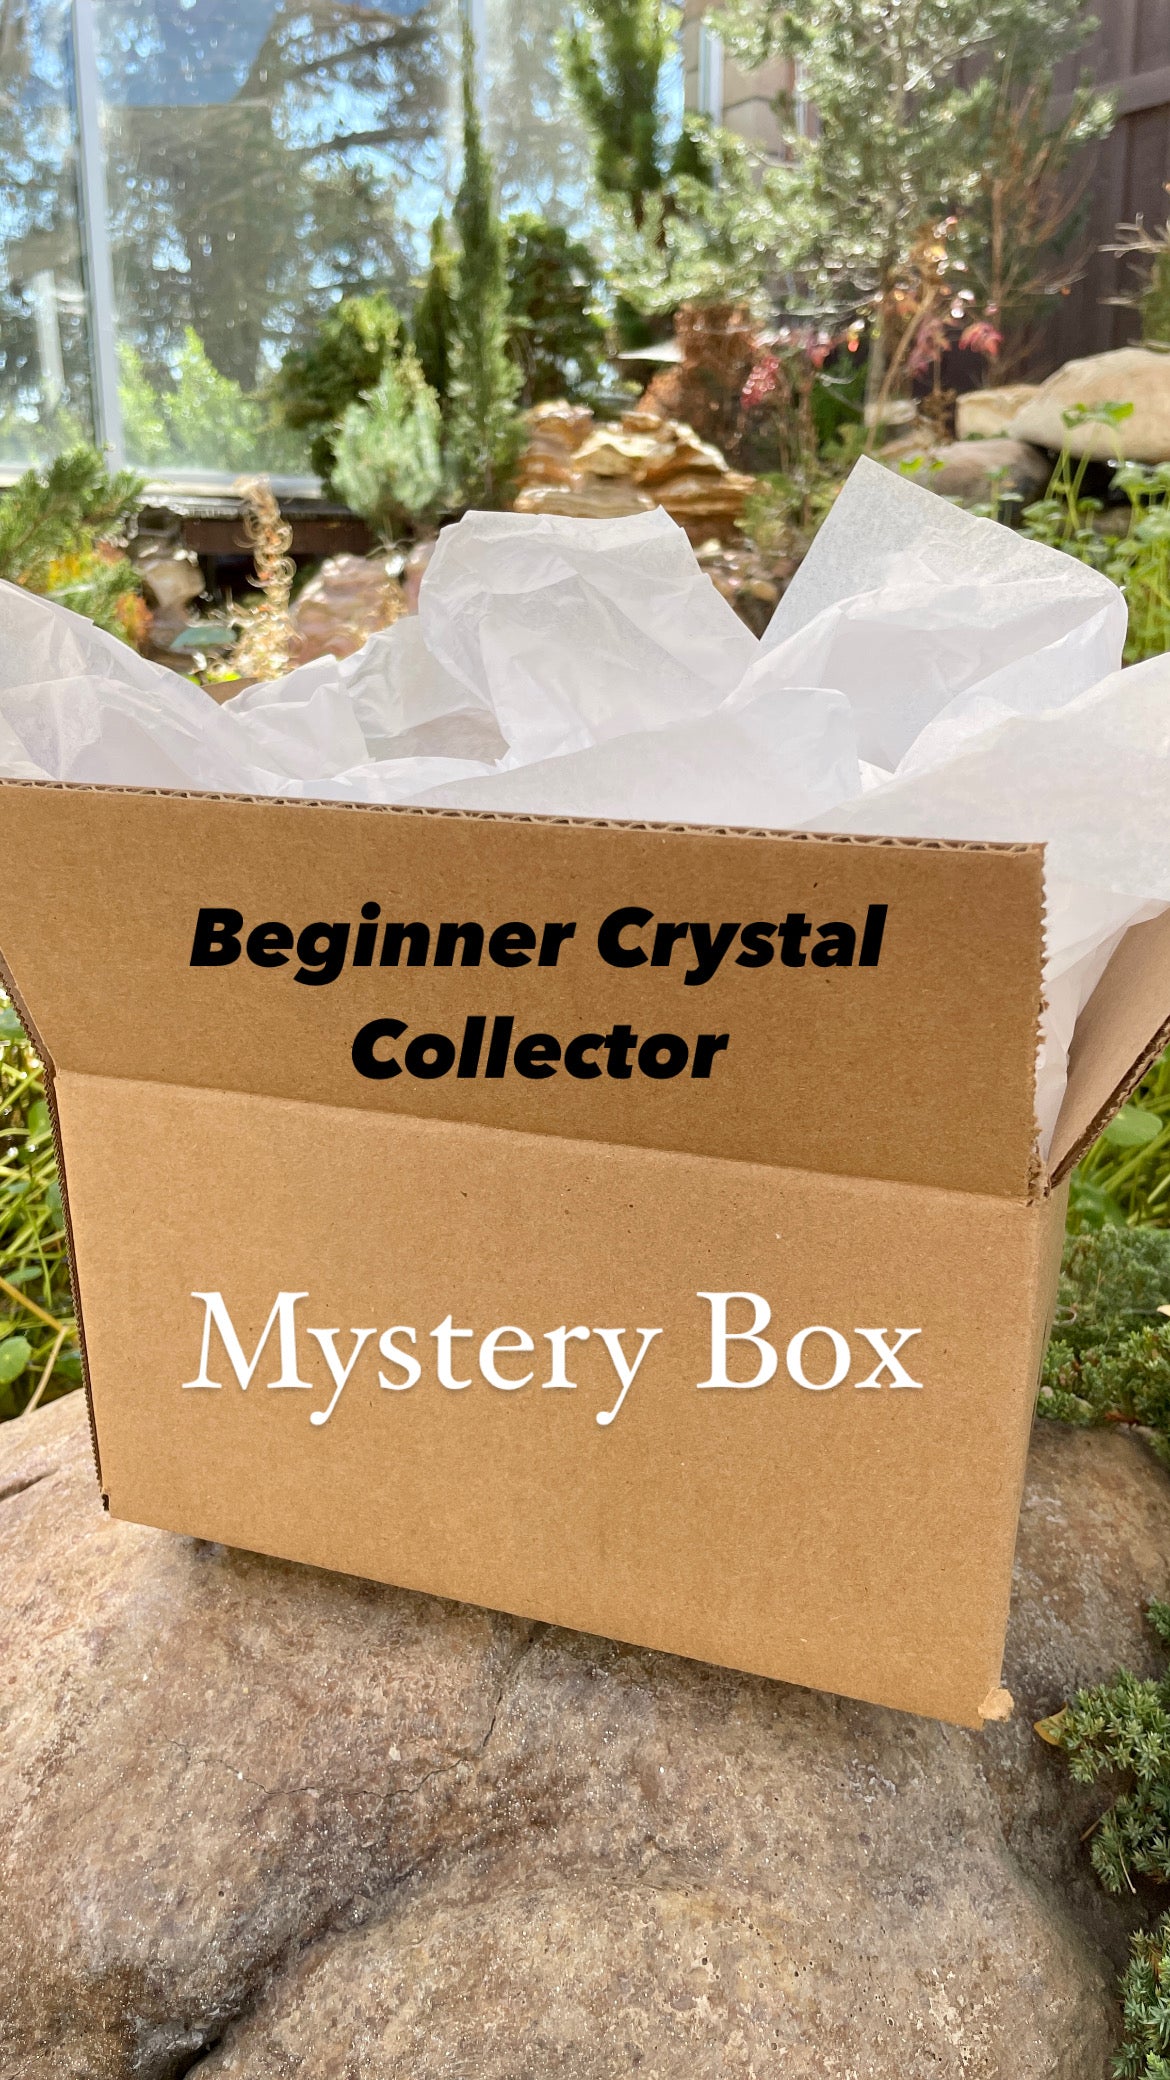 Beginner Crystal Collector Mystery Box $150